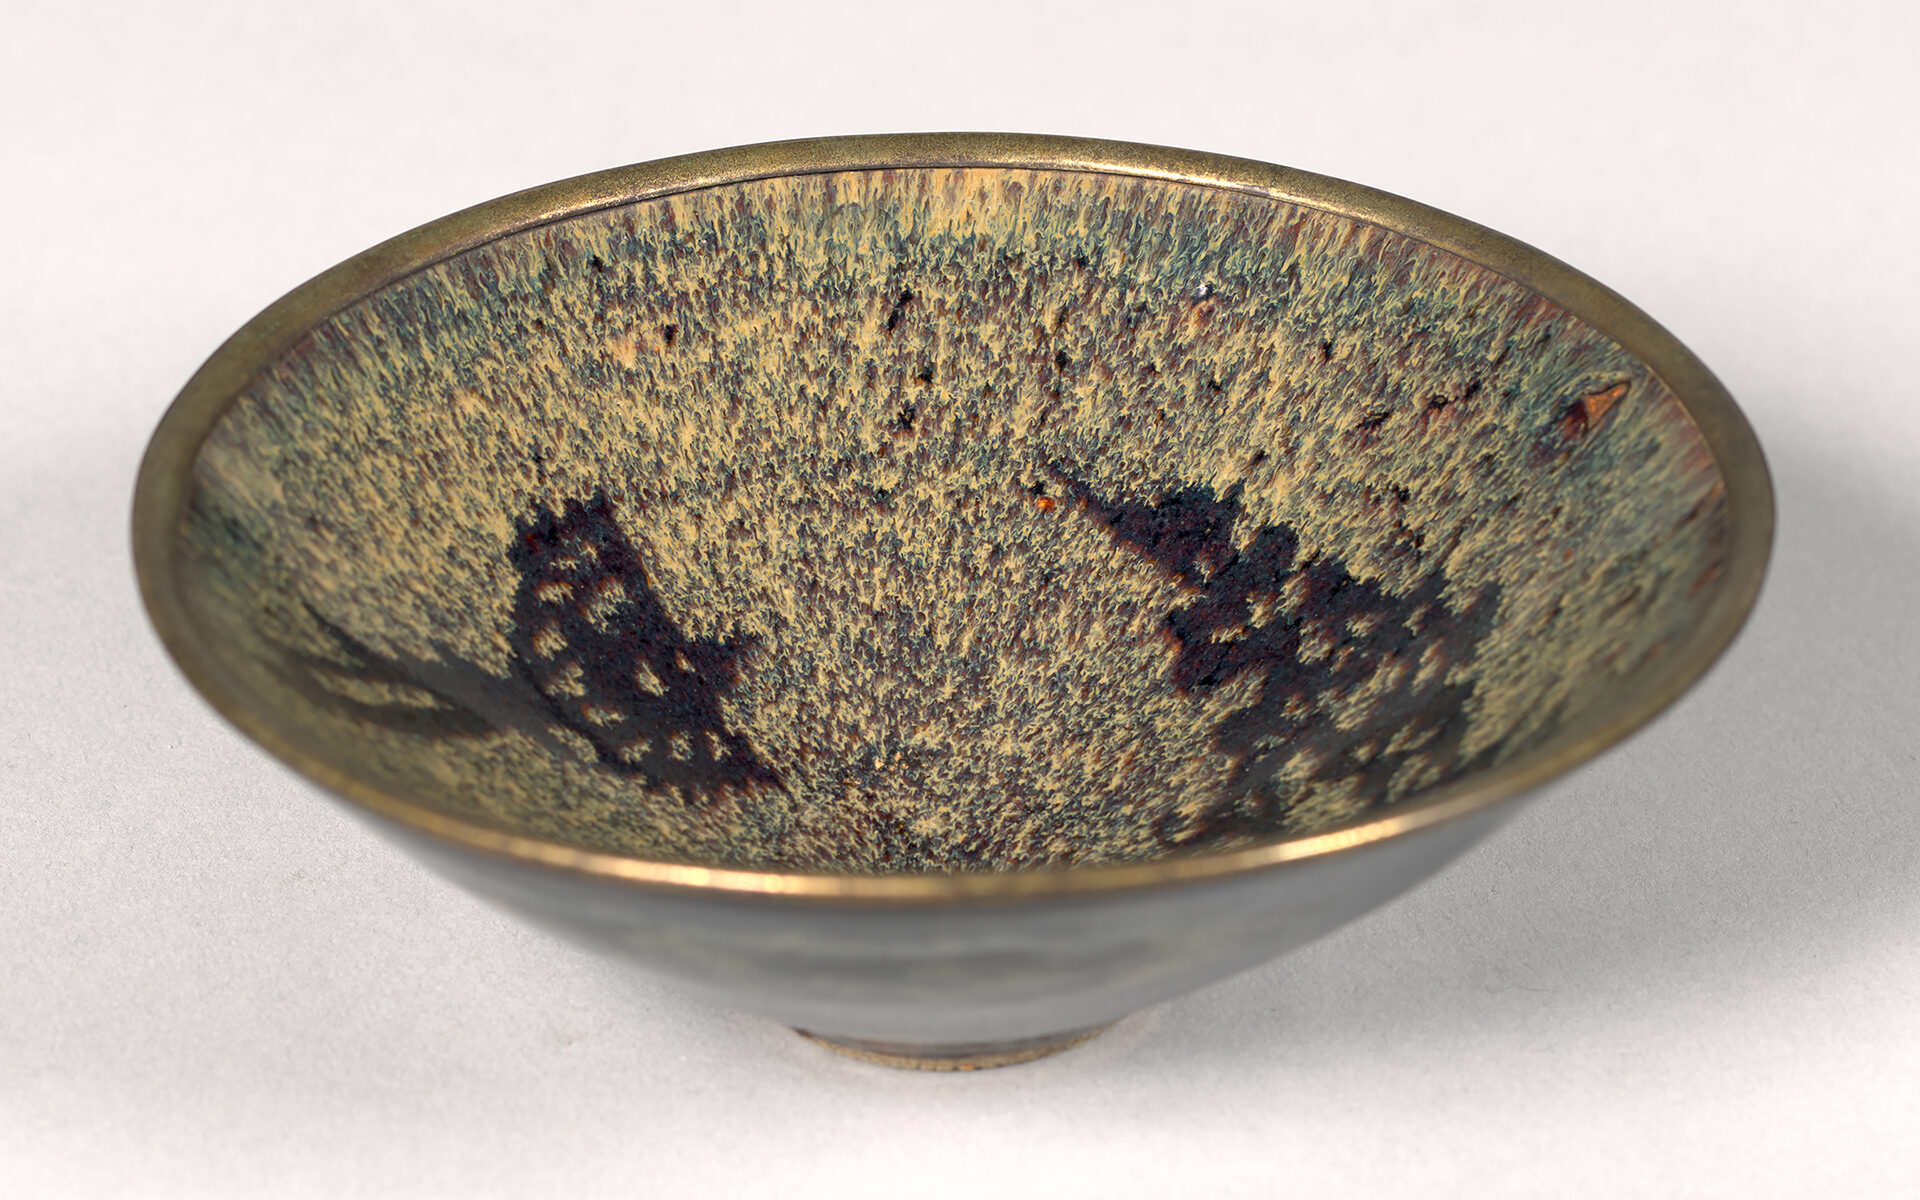 Japanese Tastes in Chinese Ceramics - Exhibitions - Asian Art Museum